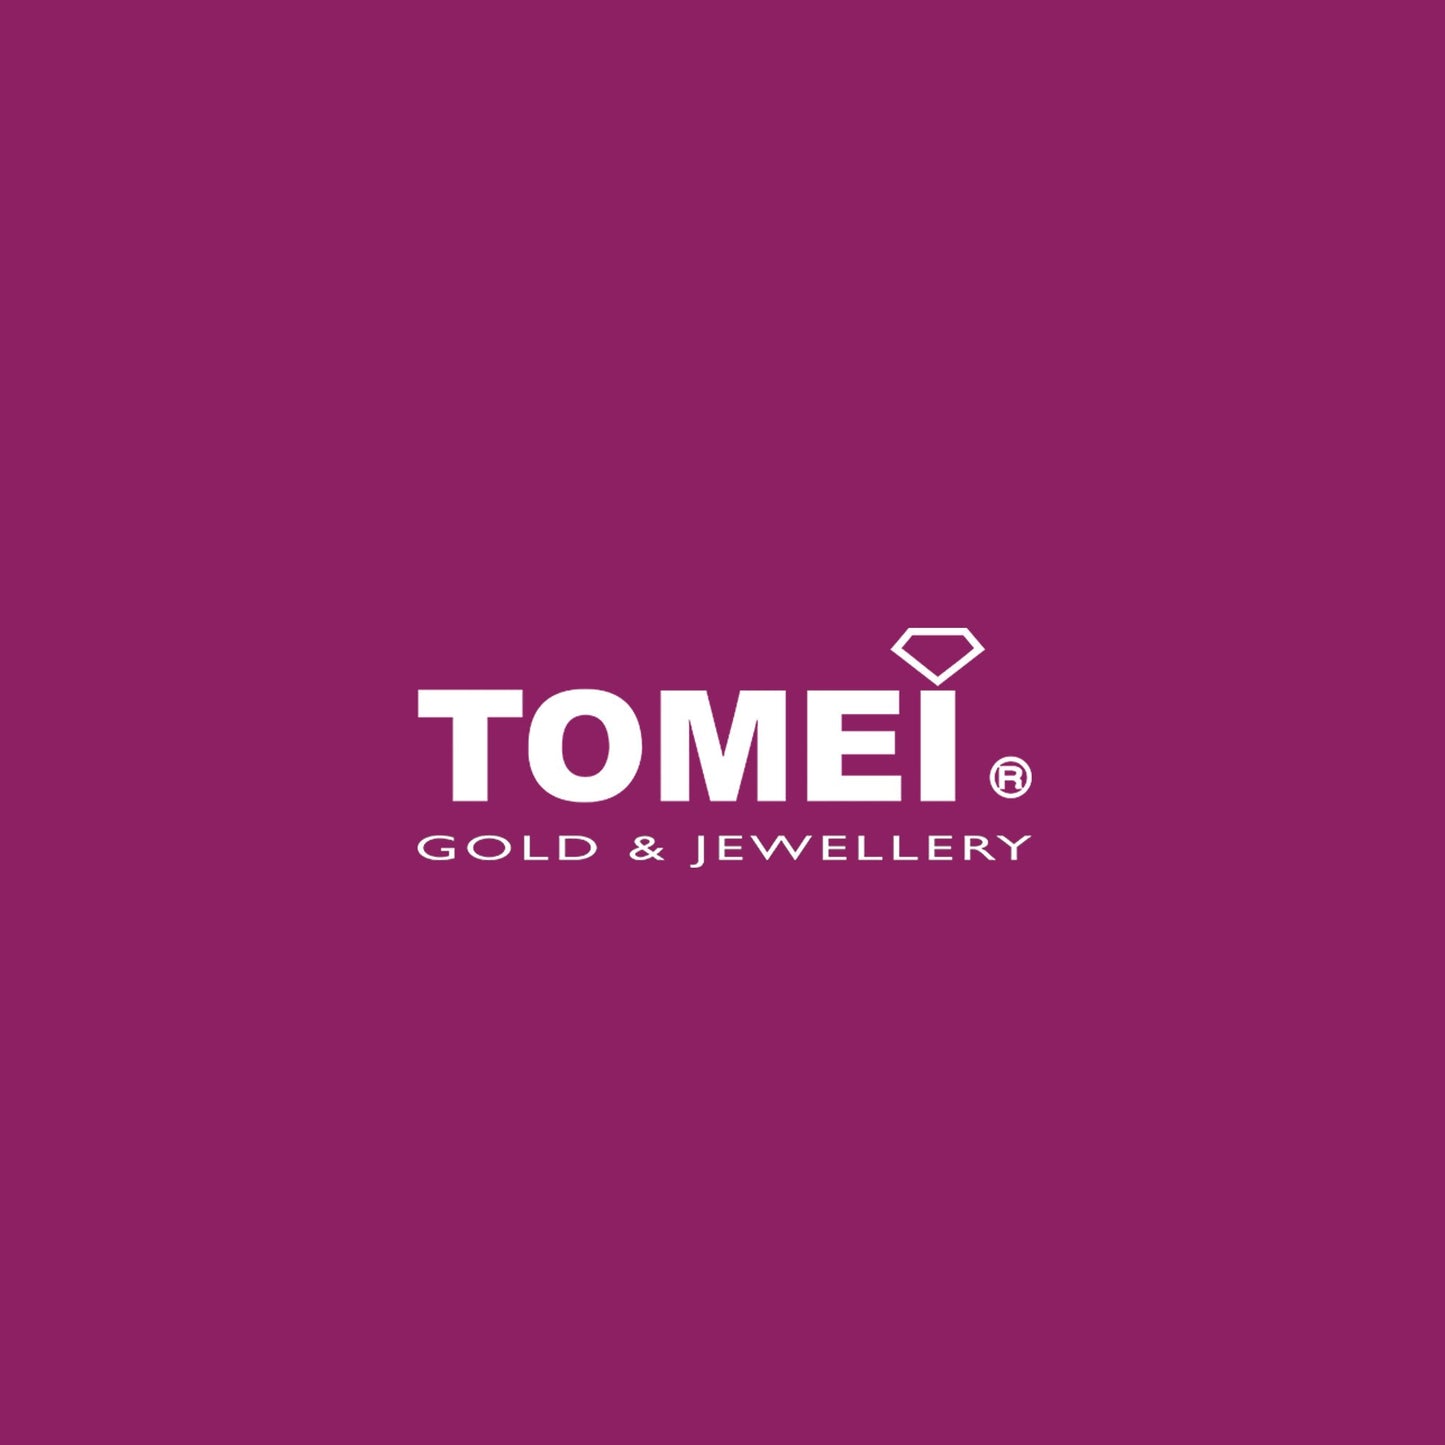 TOMEI ???? Money Bag Pendant, Yellow Gold 916